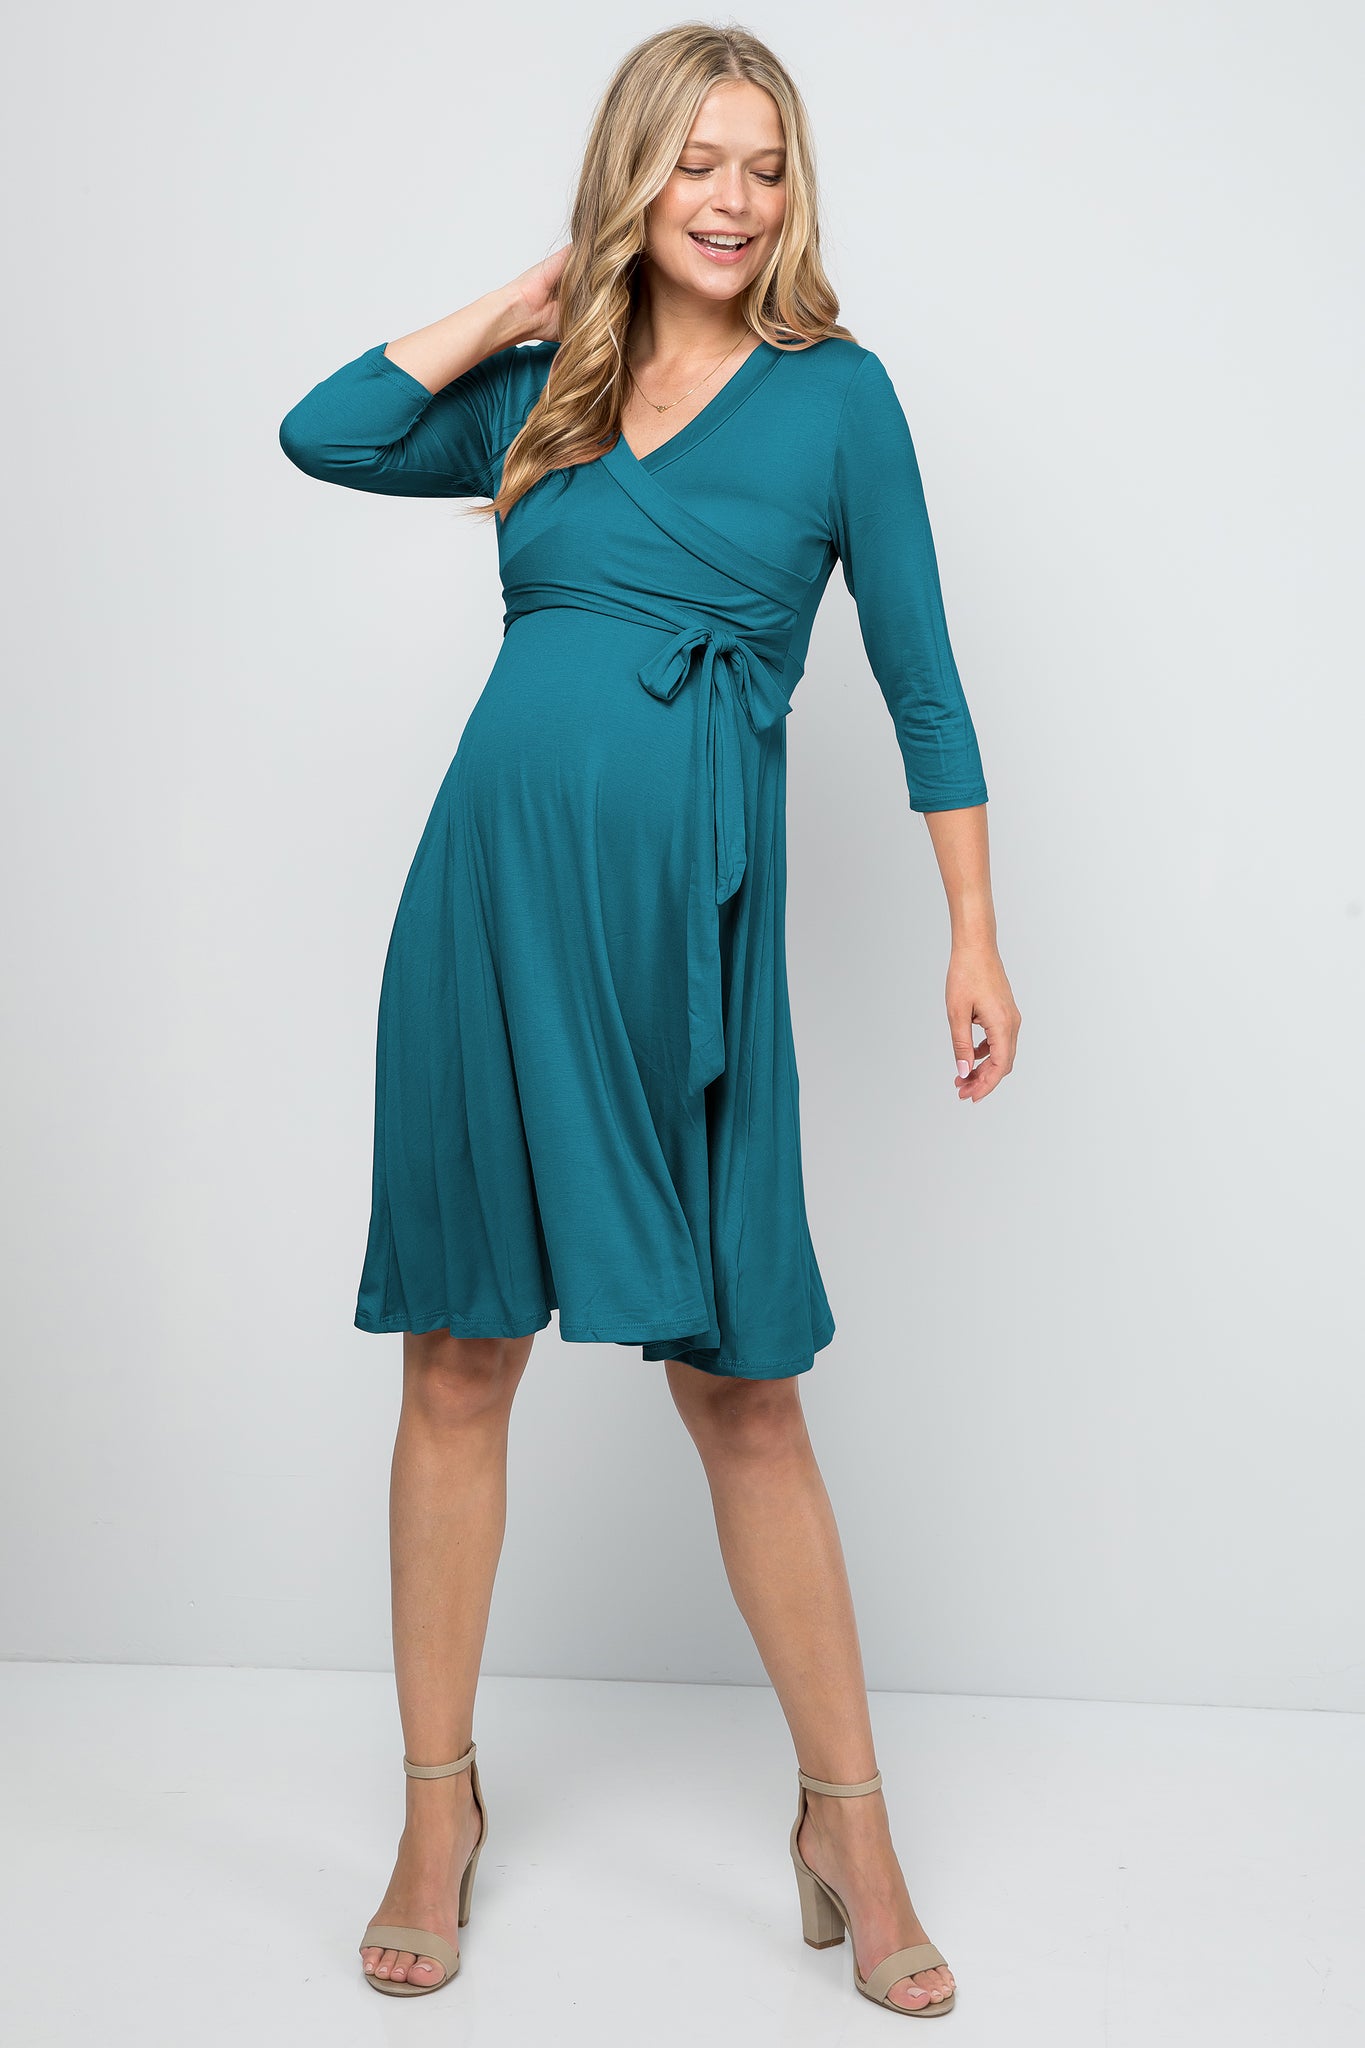 maternity pregnancy baby shower fit flare quarter sleeve surplice spring summer cocktail dress